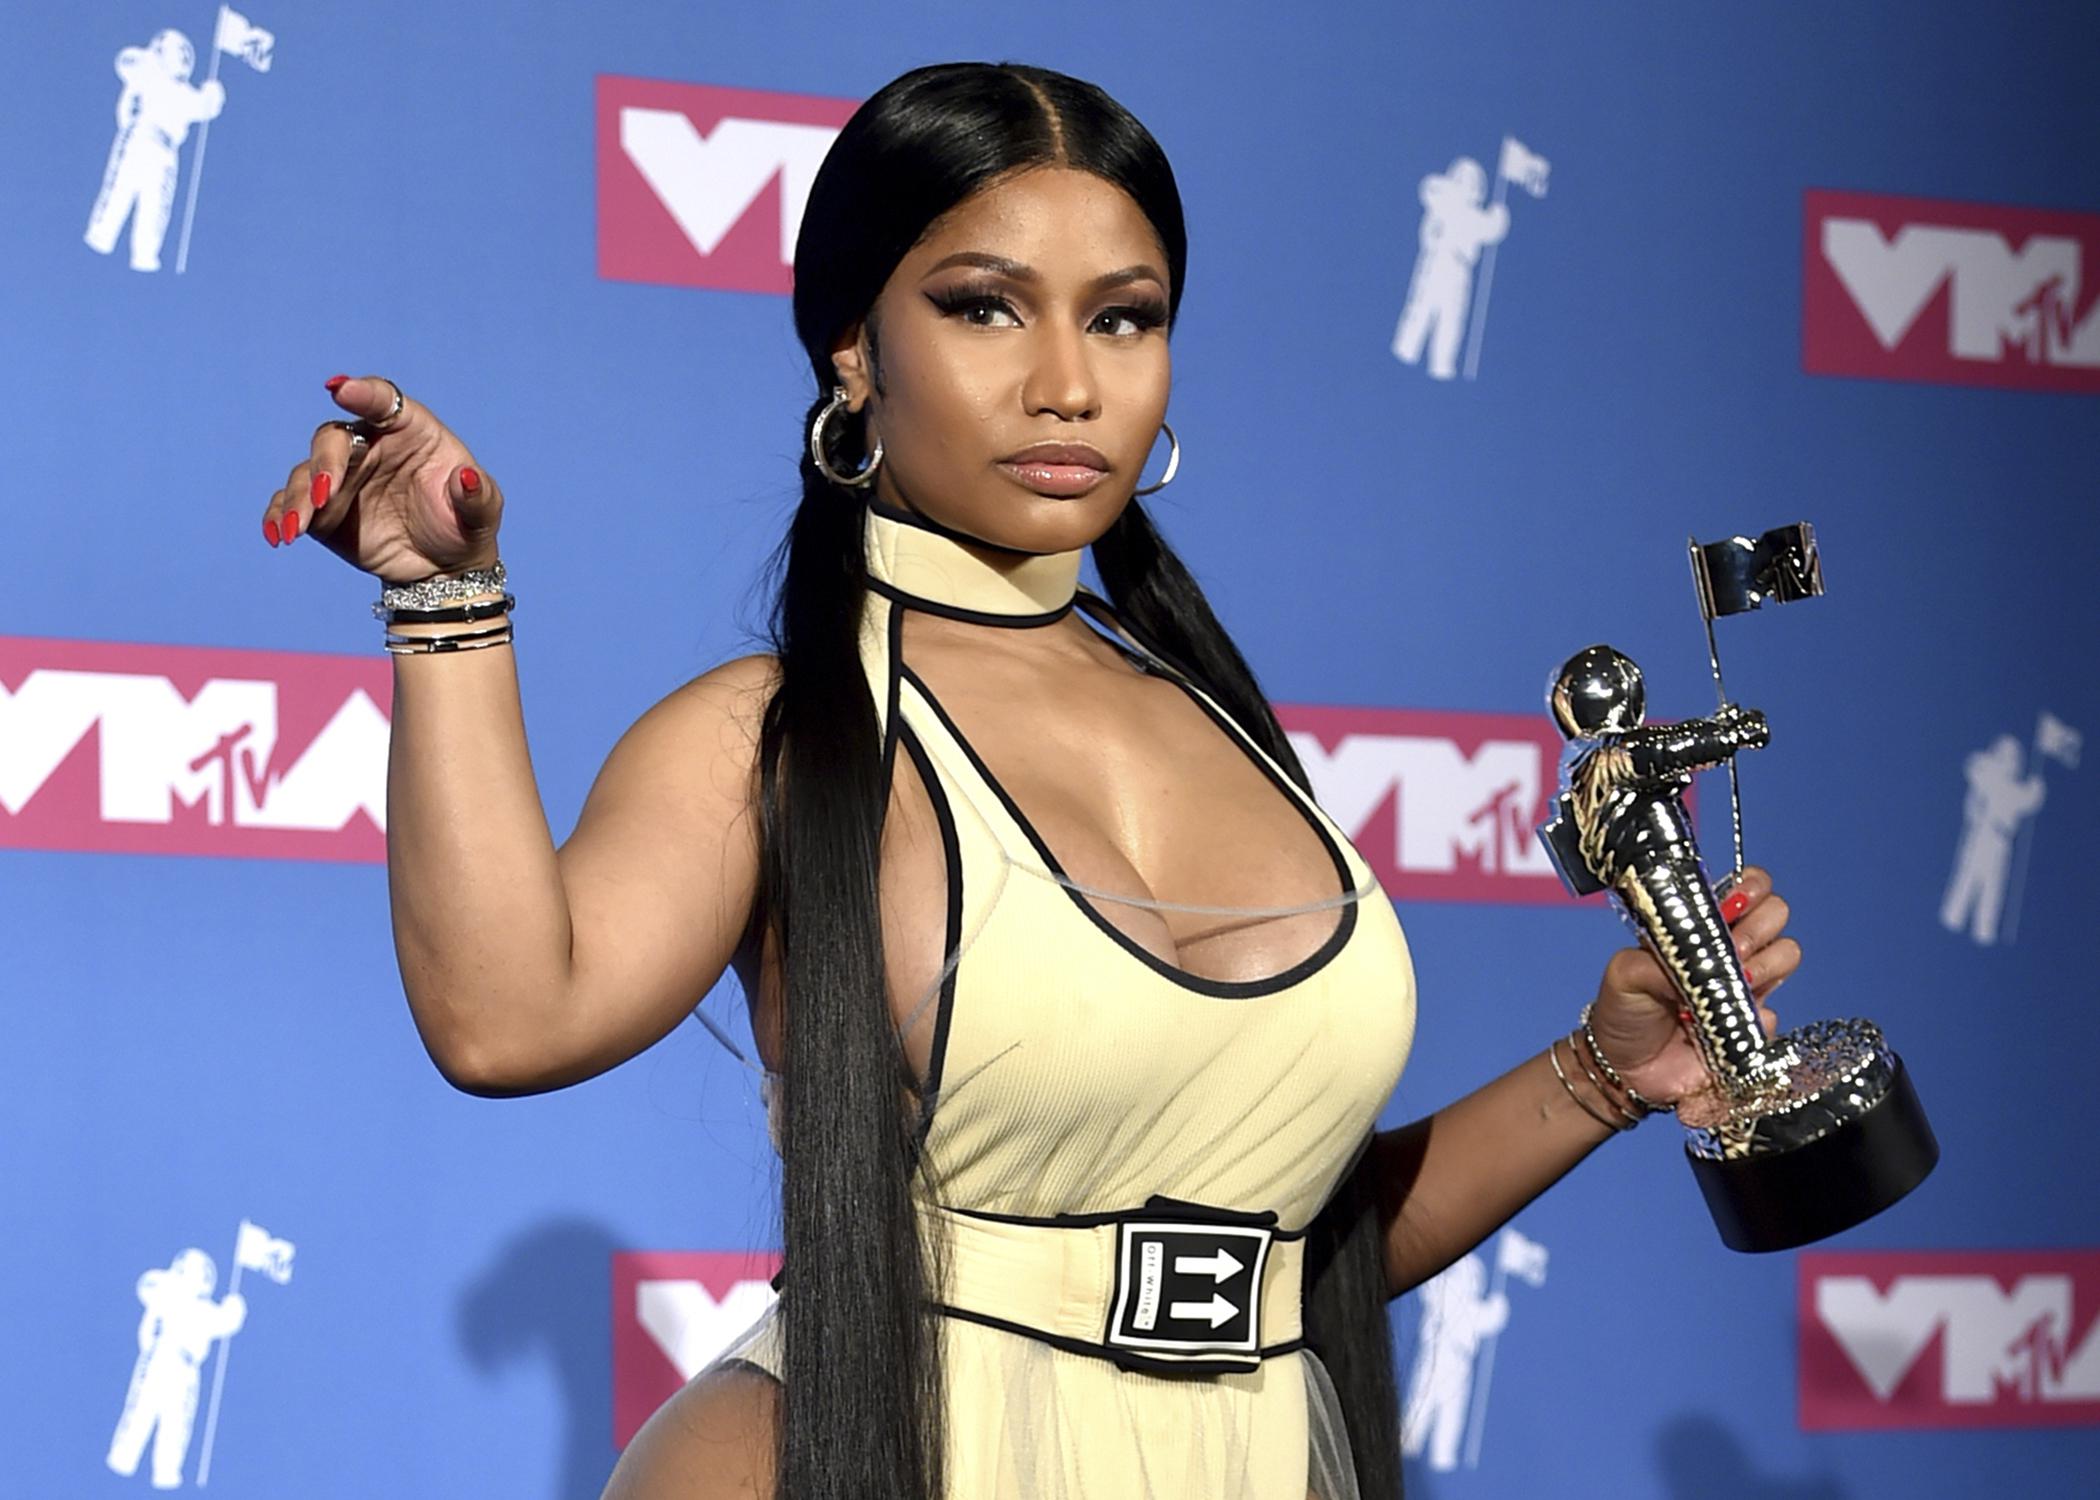 Browser Sexy Blue Video - Nicki Minaj to get Video Vanguard Award at MTV Awards | AP News